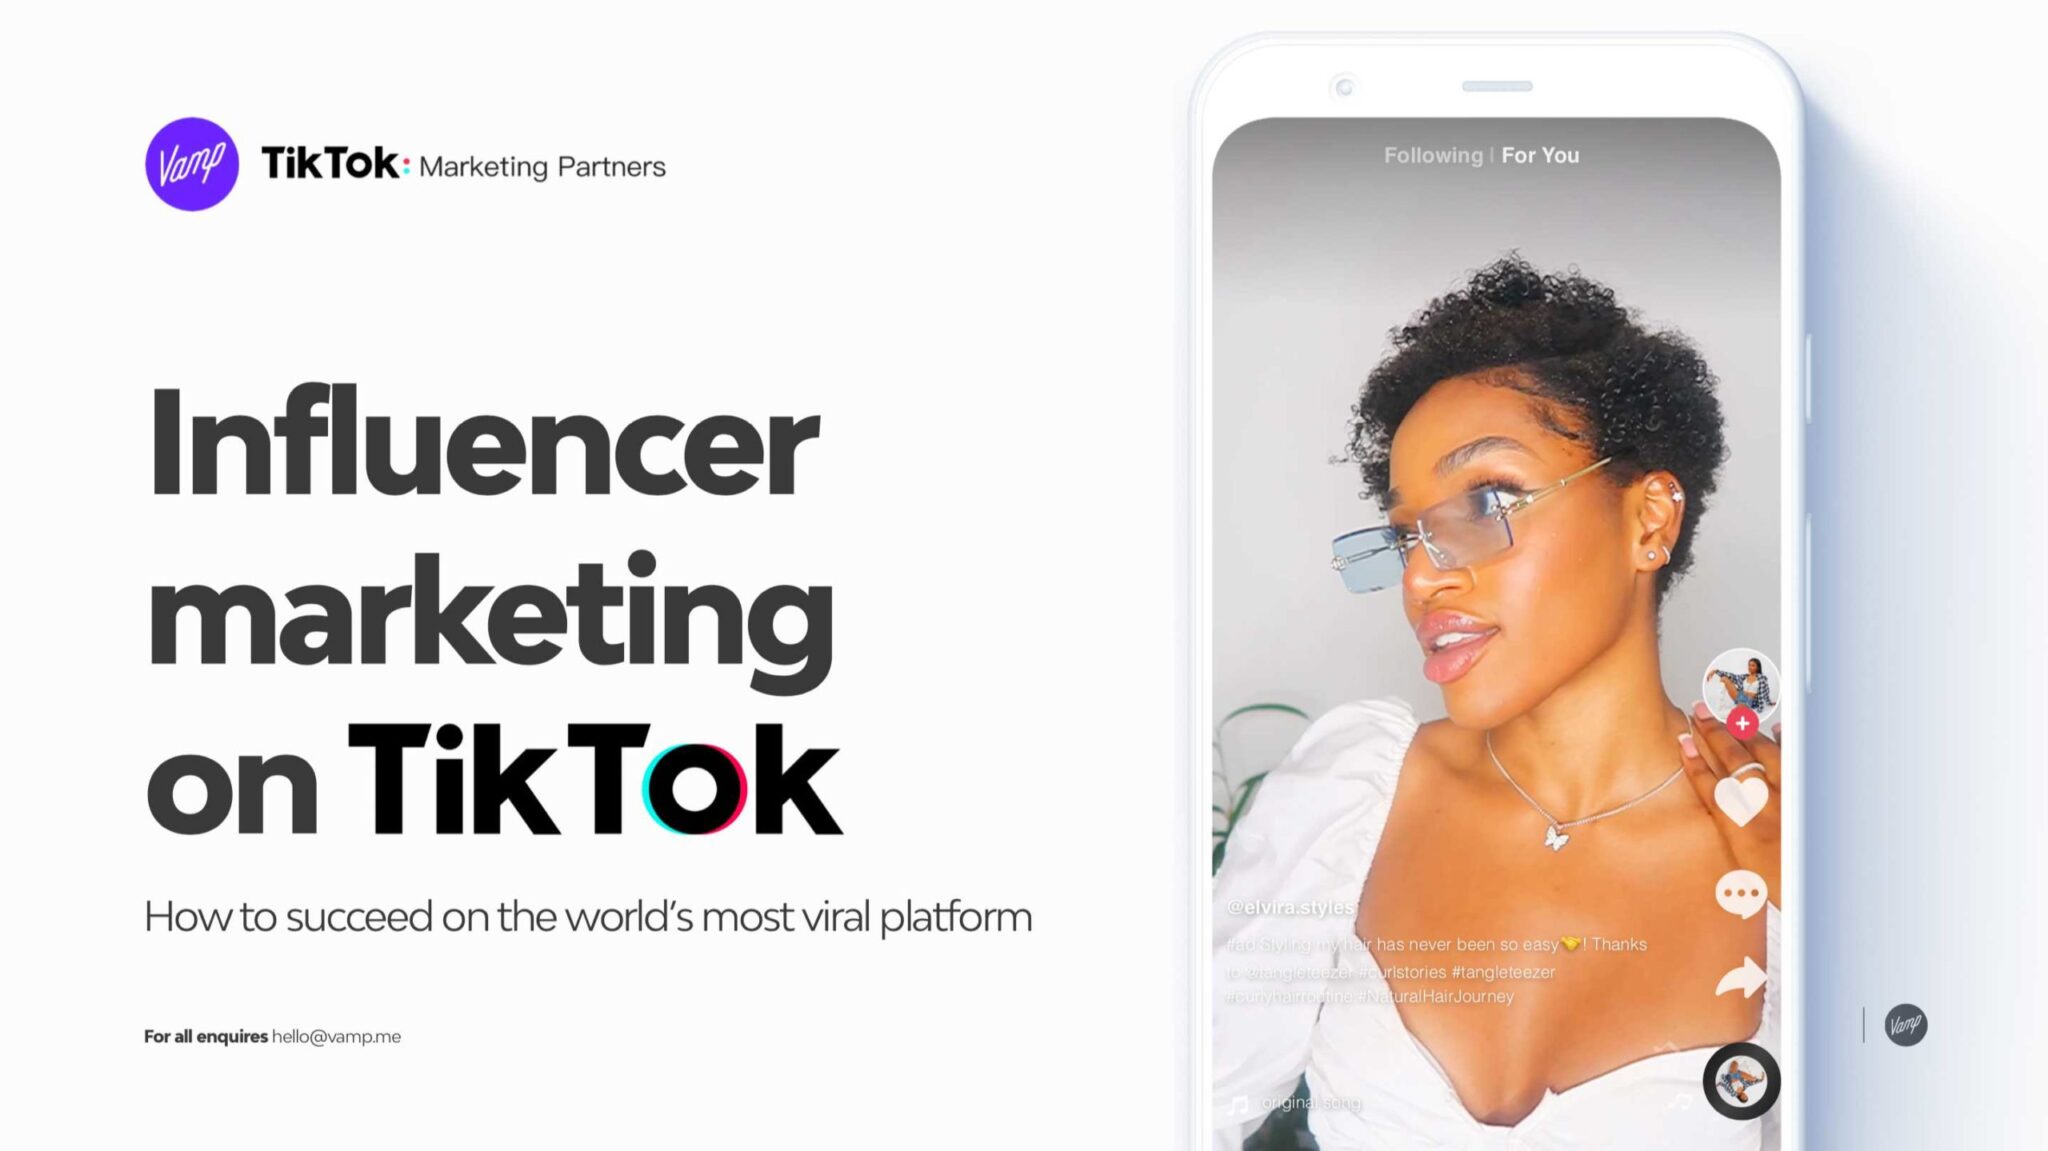 Download Vamps free Influencer marketing on TikTok guide